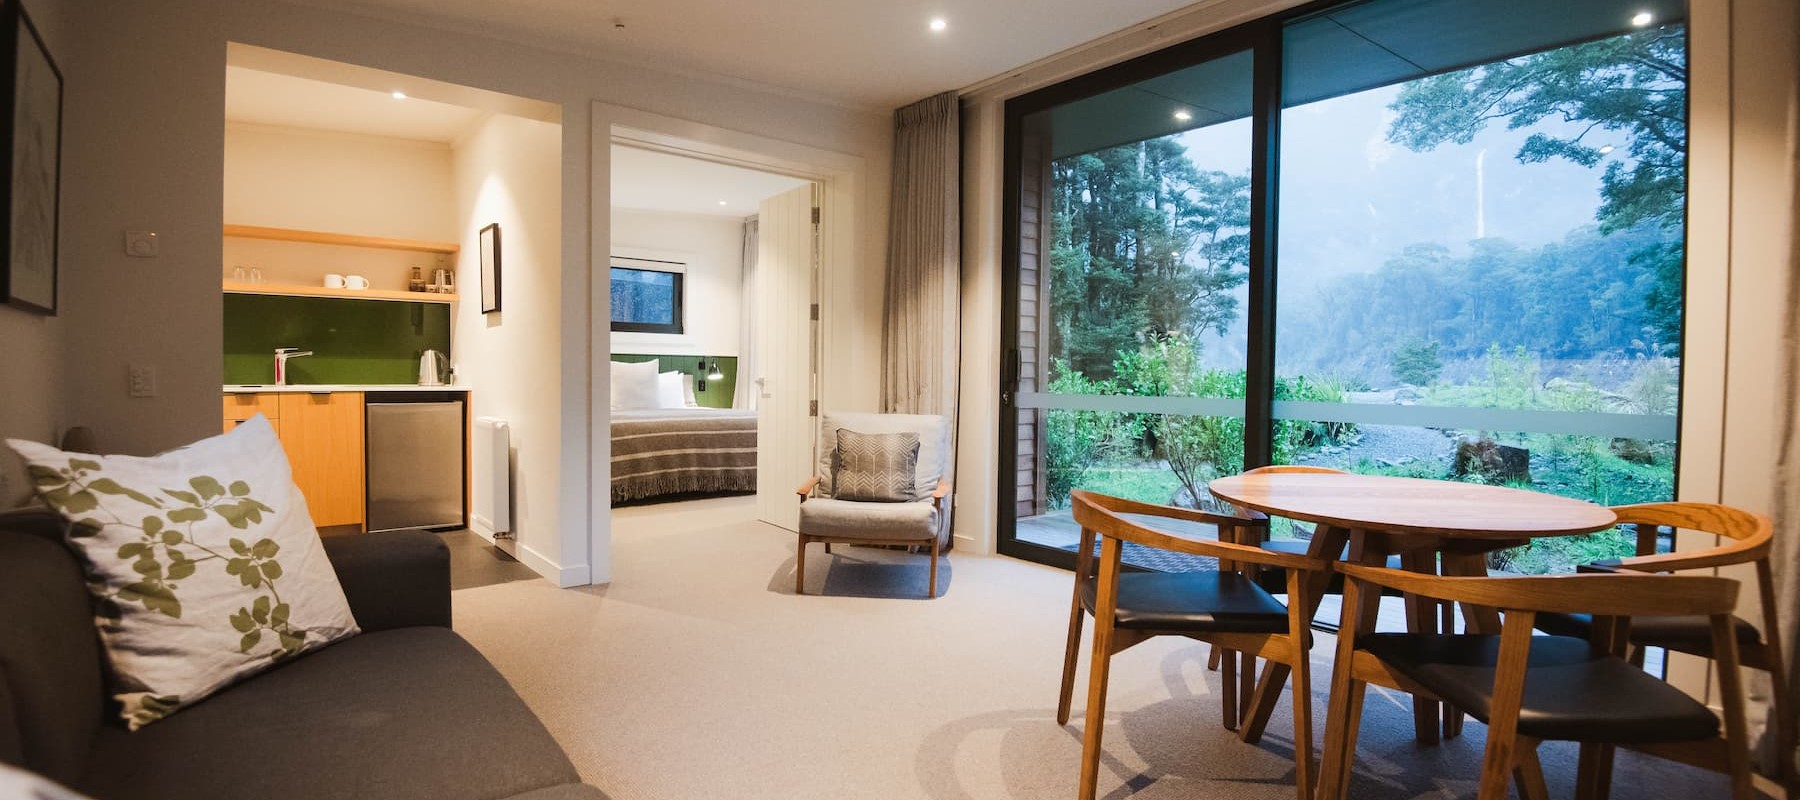 Milford Sound Lodge - Sitting room 